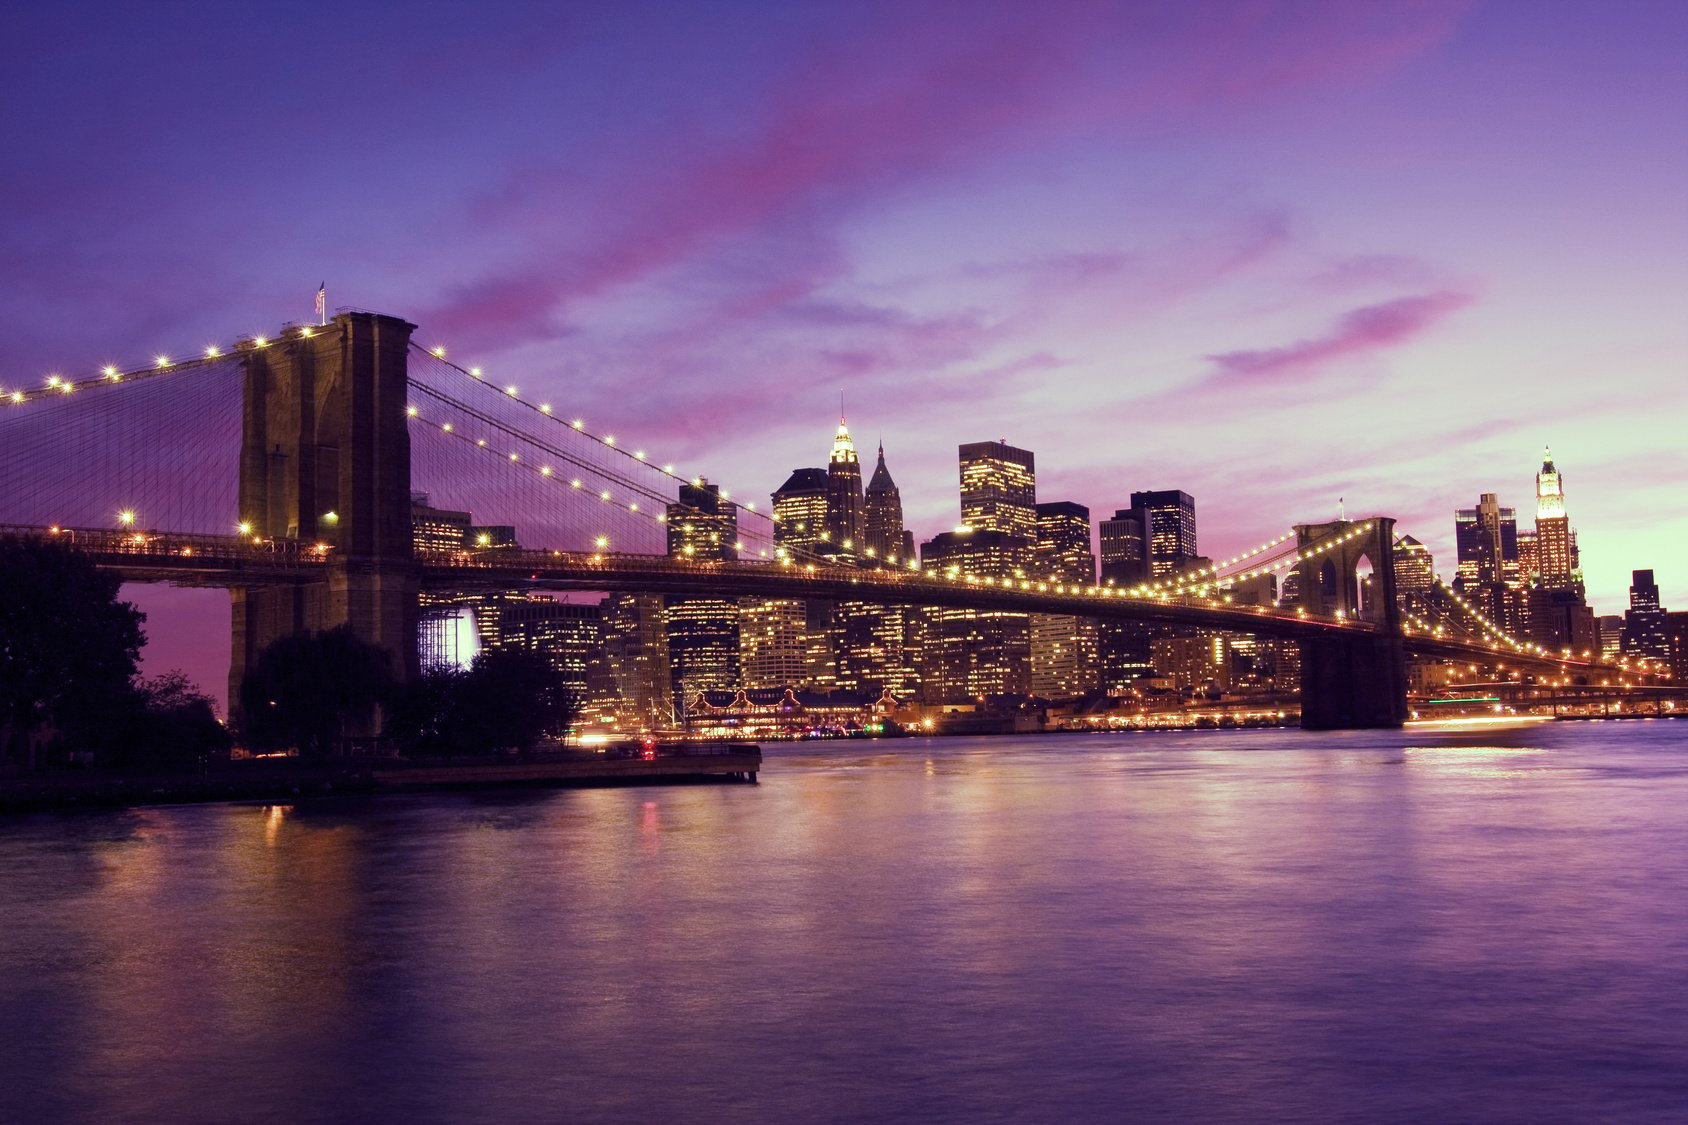 Brooklyn Bridge and Manhattan at sunset, New York